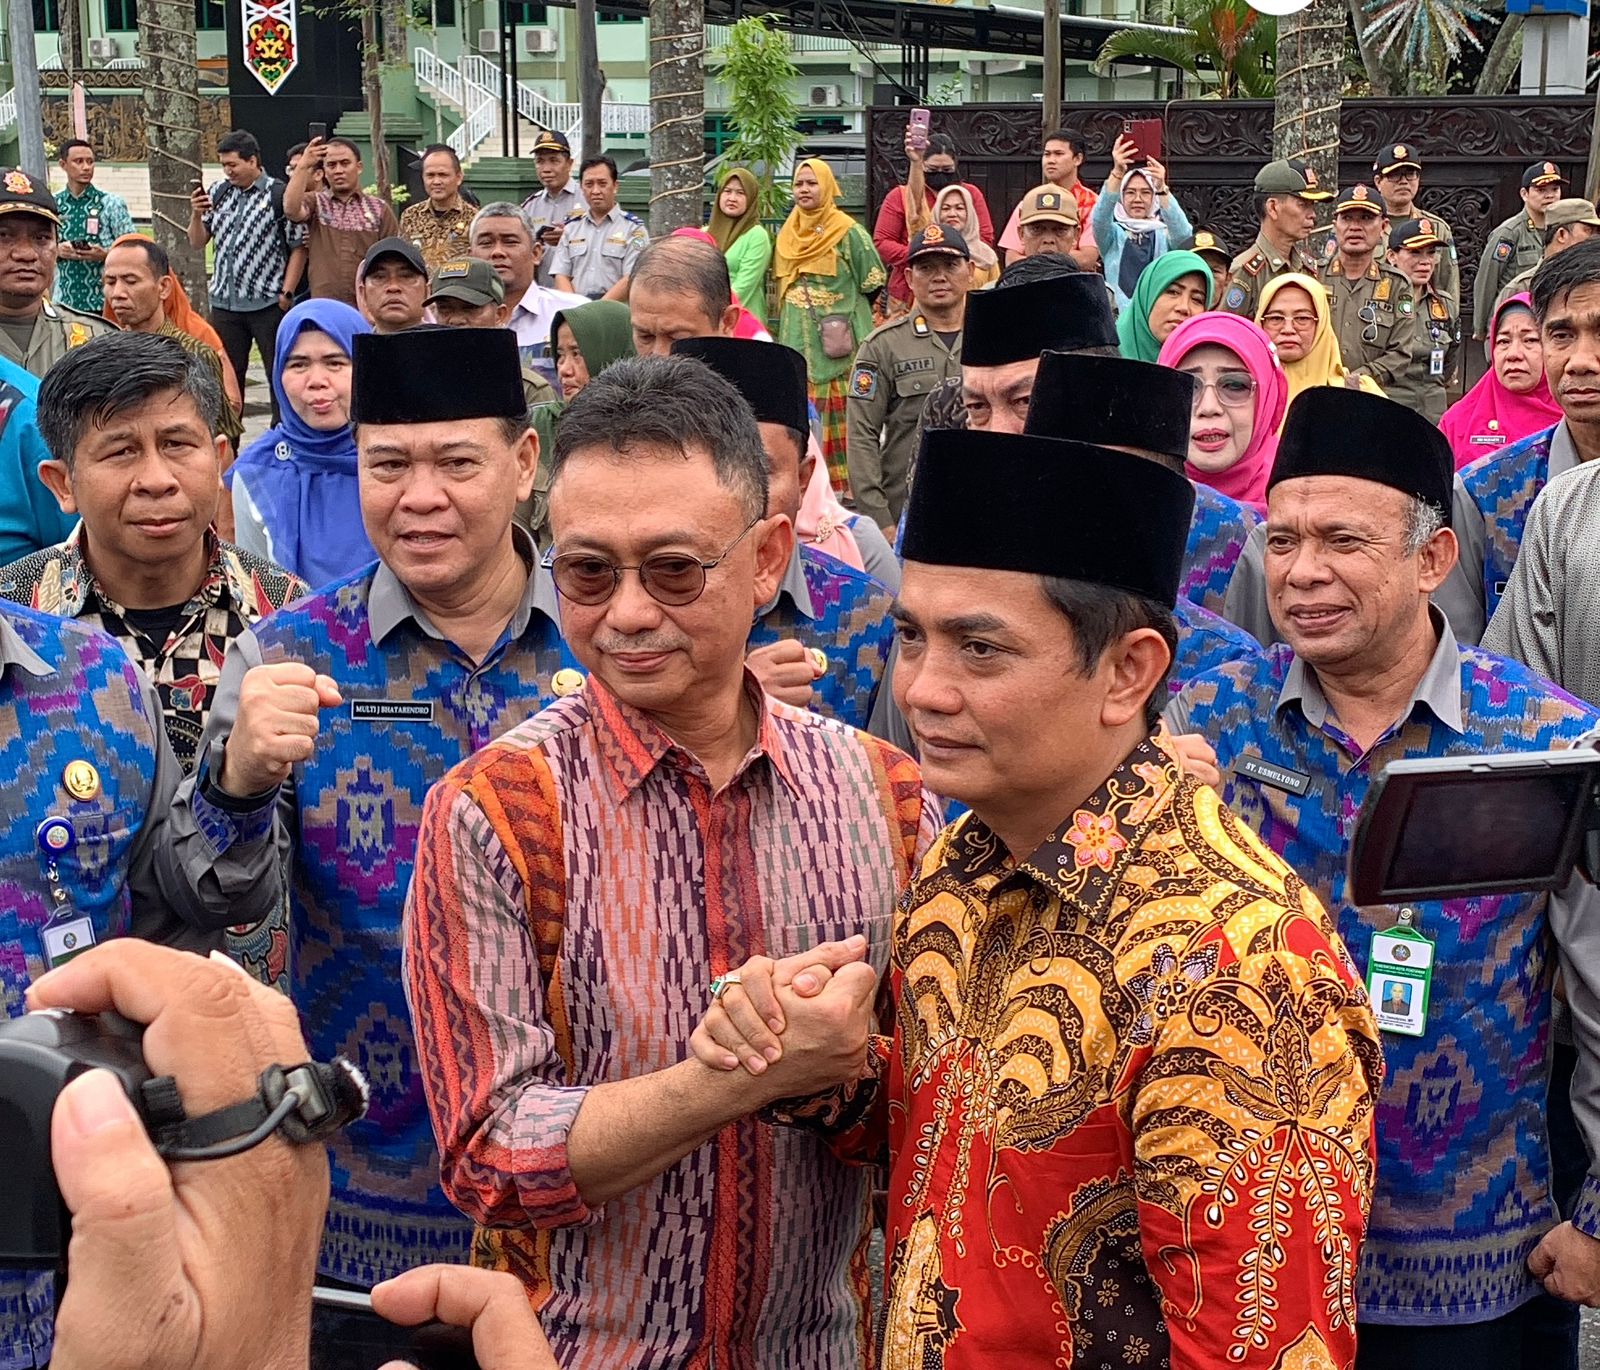 Wali Kota Pontianak, Edi Rusdi Kamtono dan Wakil Wali Kota Pontianak, Bahasan berpamitan dengan seluruh ASN di akhir masa jabatannya yang jatuh pada tanggal 23 Desember 2023. (Foto: Indri)